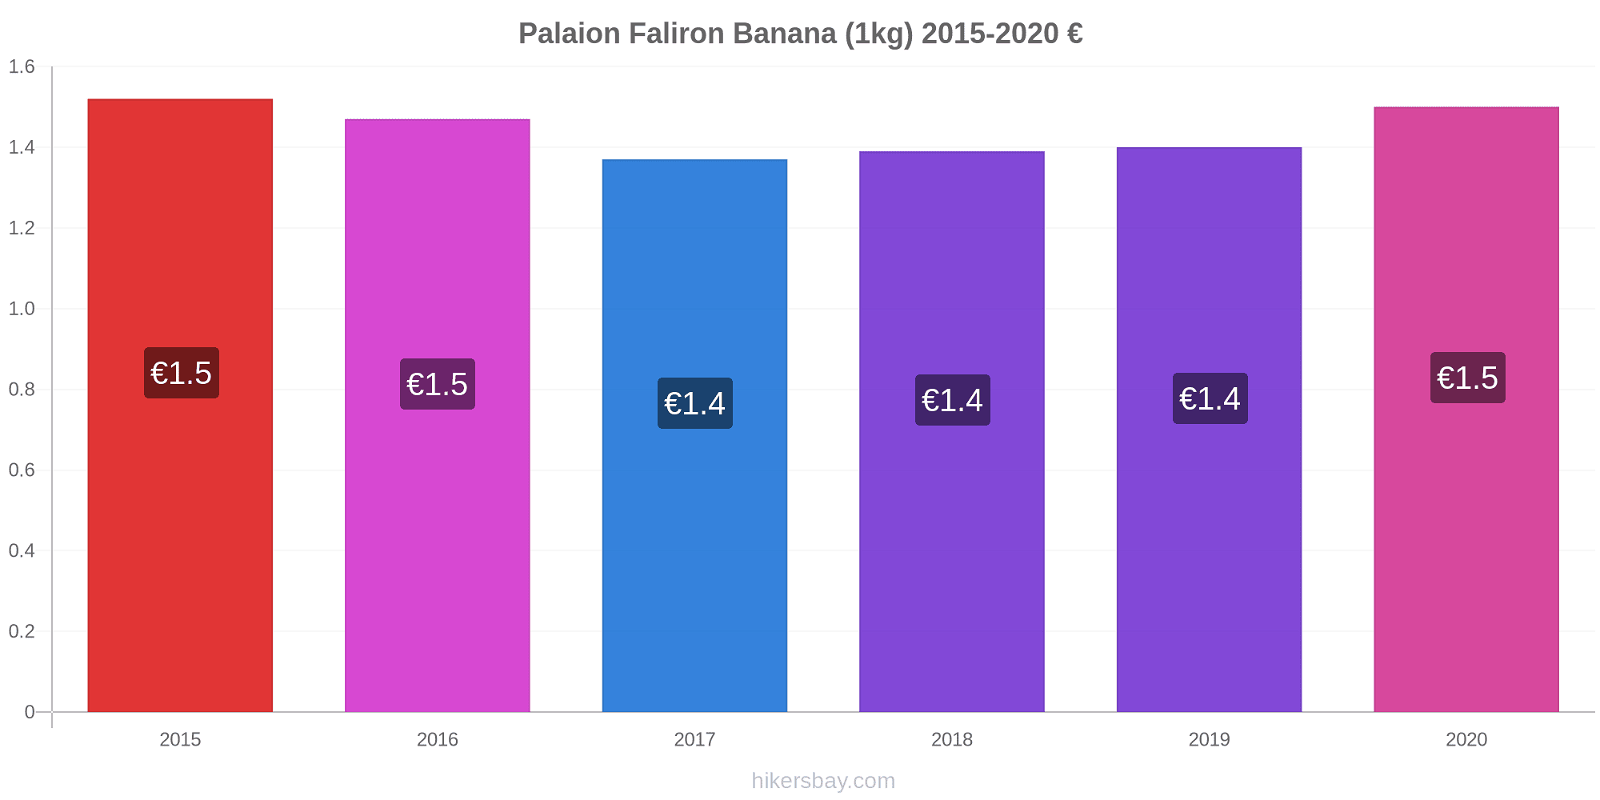 Palaion Faliron modificări de preț Banana (1kg) hikersbay.com